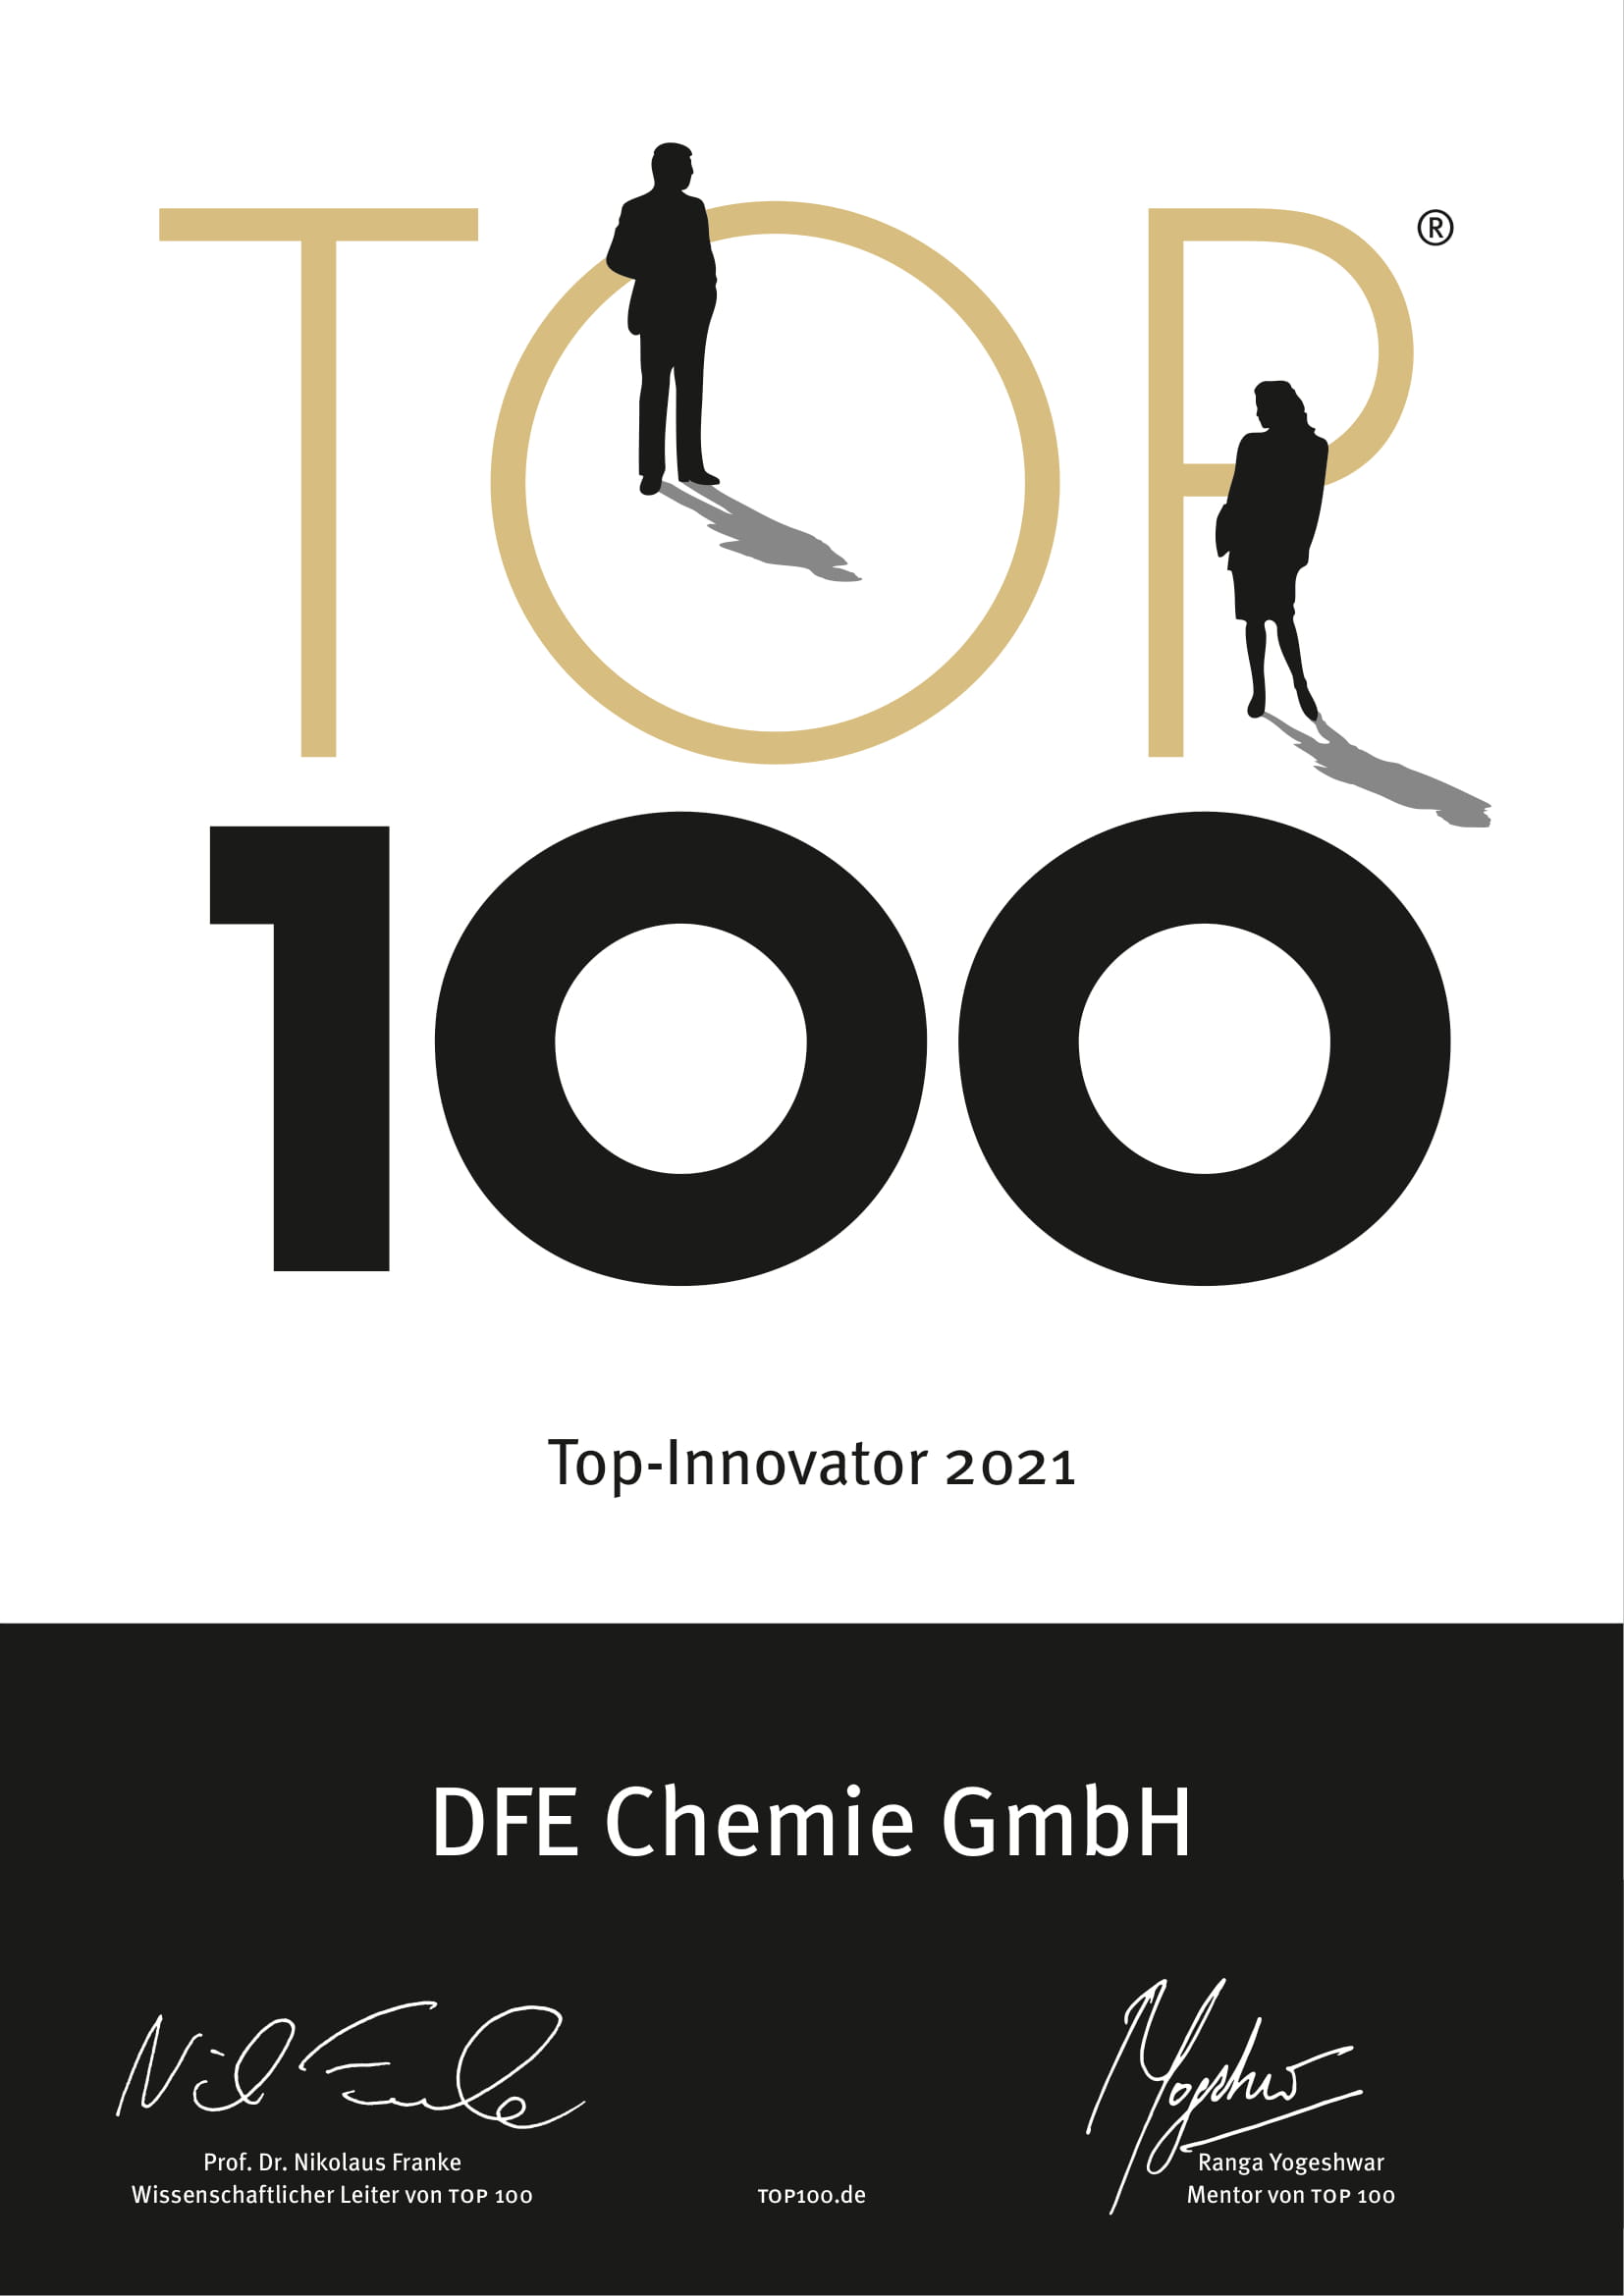 DFE荣获2021年创新前锋企业称号